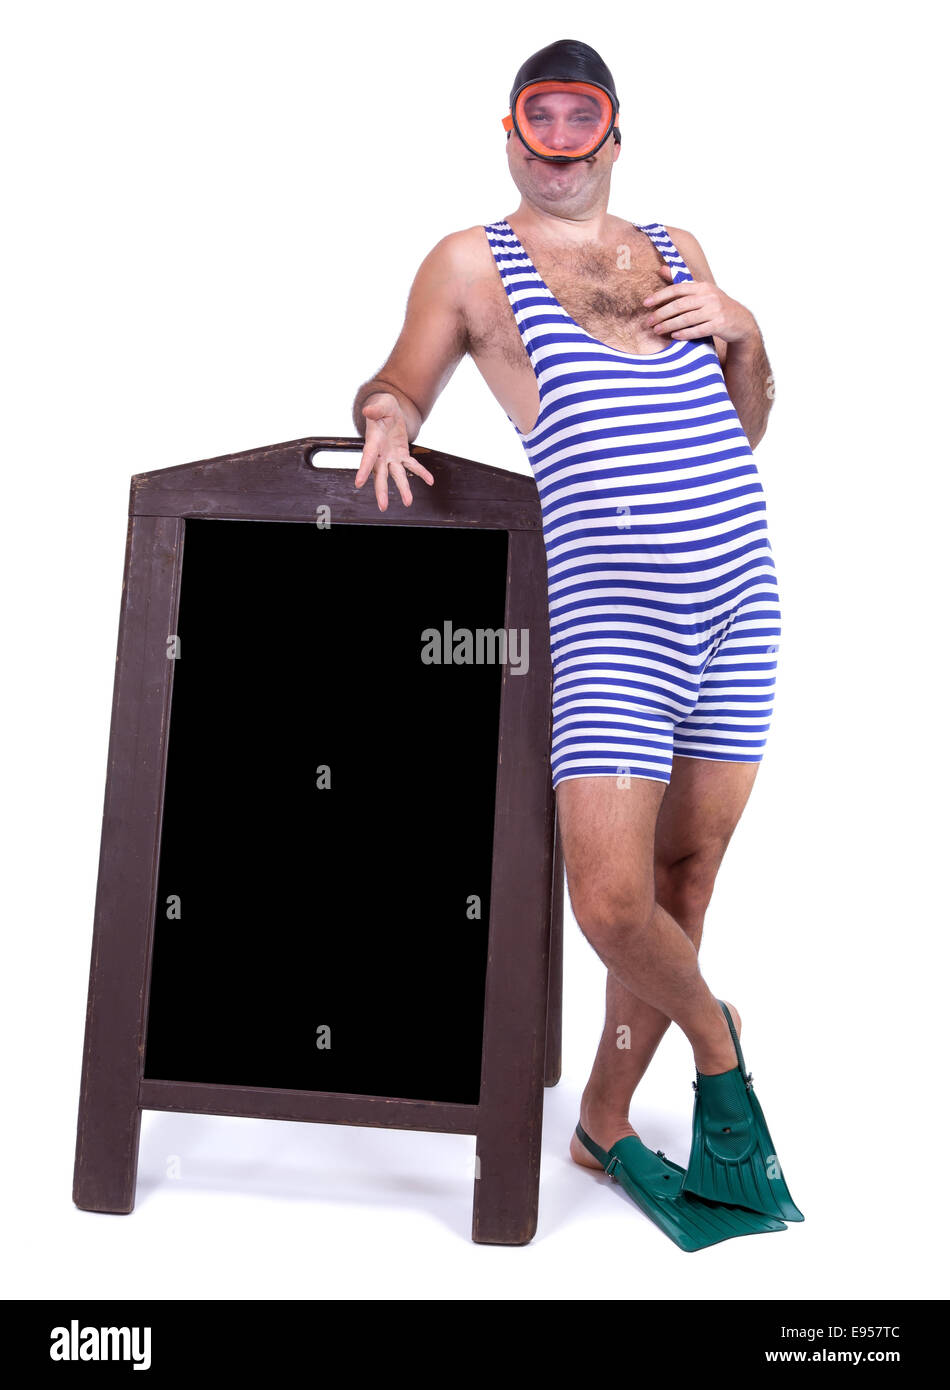 Man in swimsuit standing beside menu Stock Photo